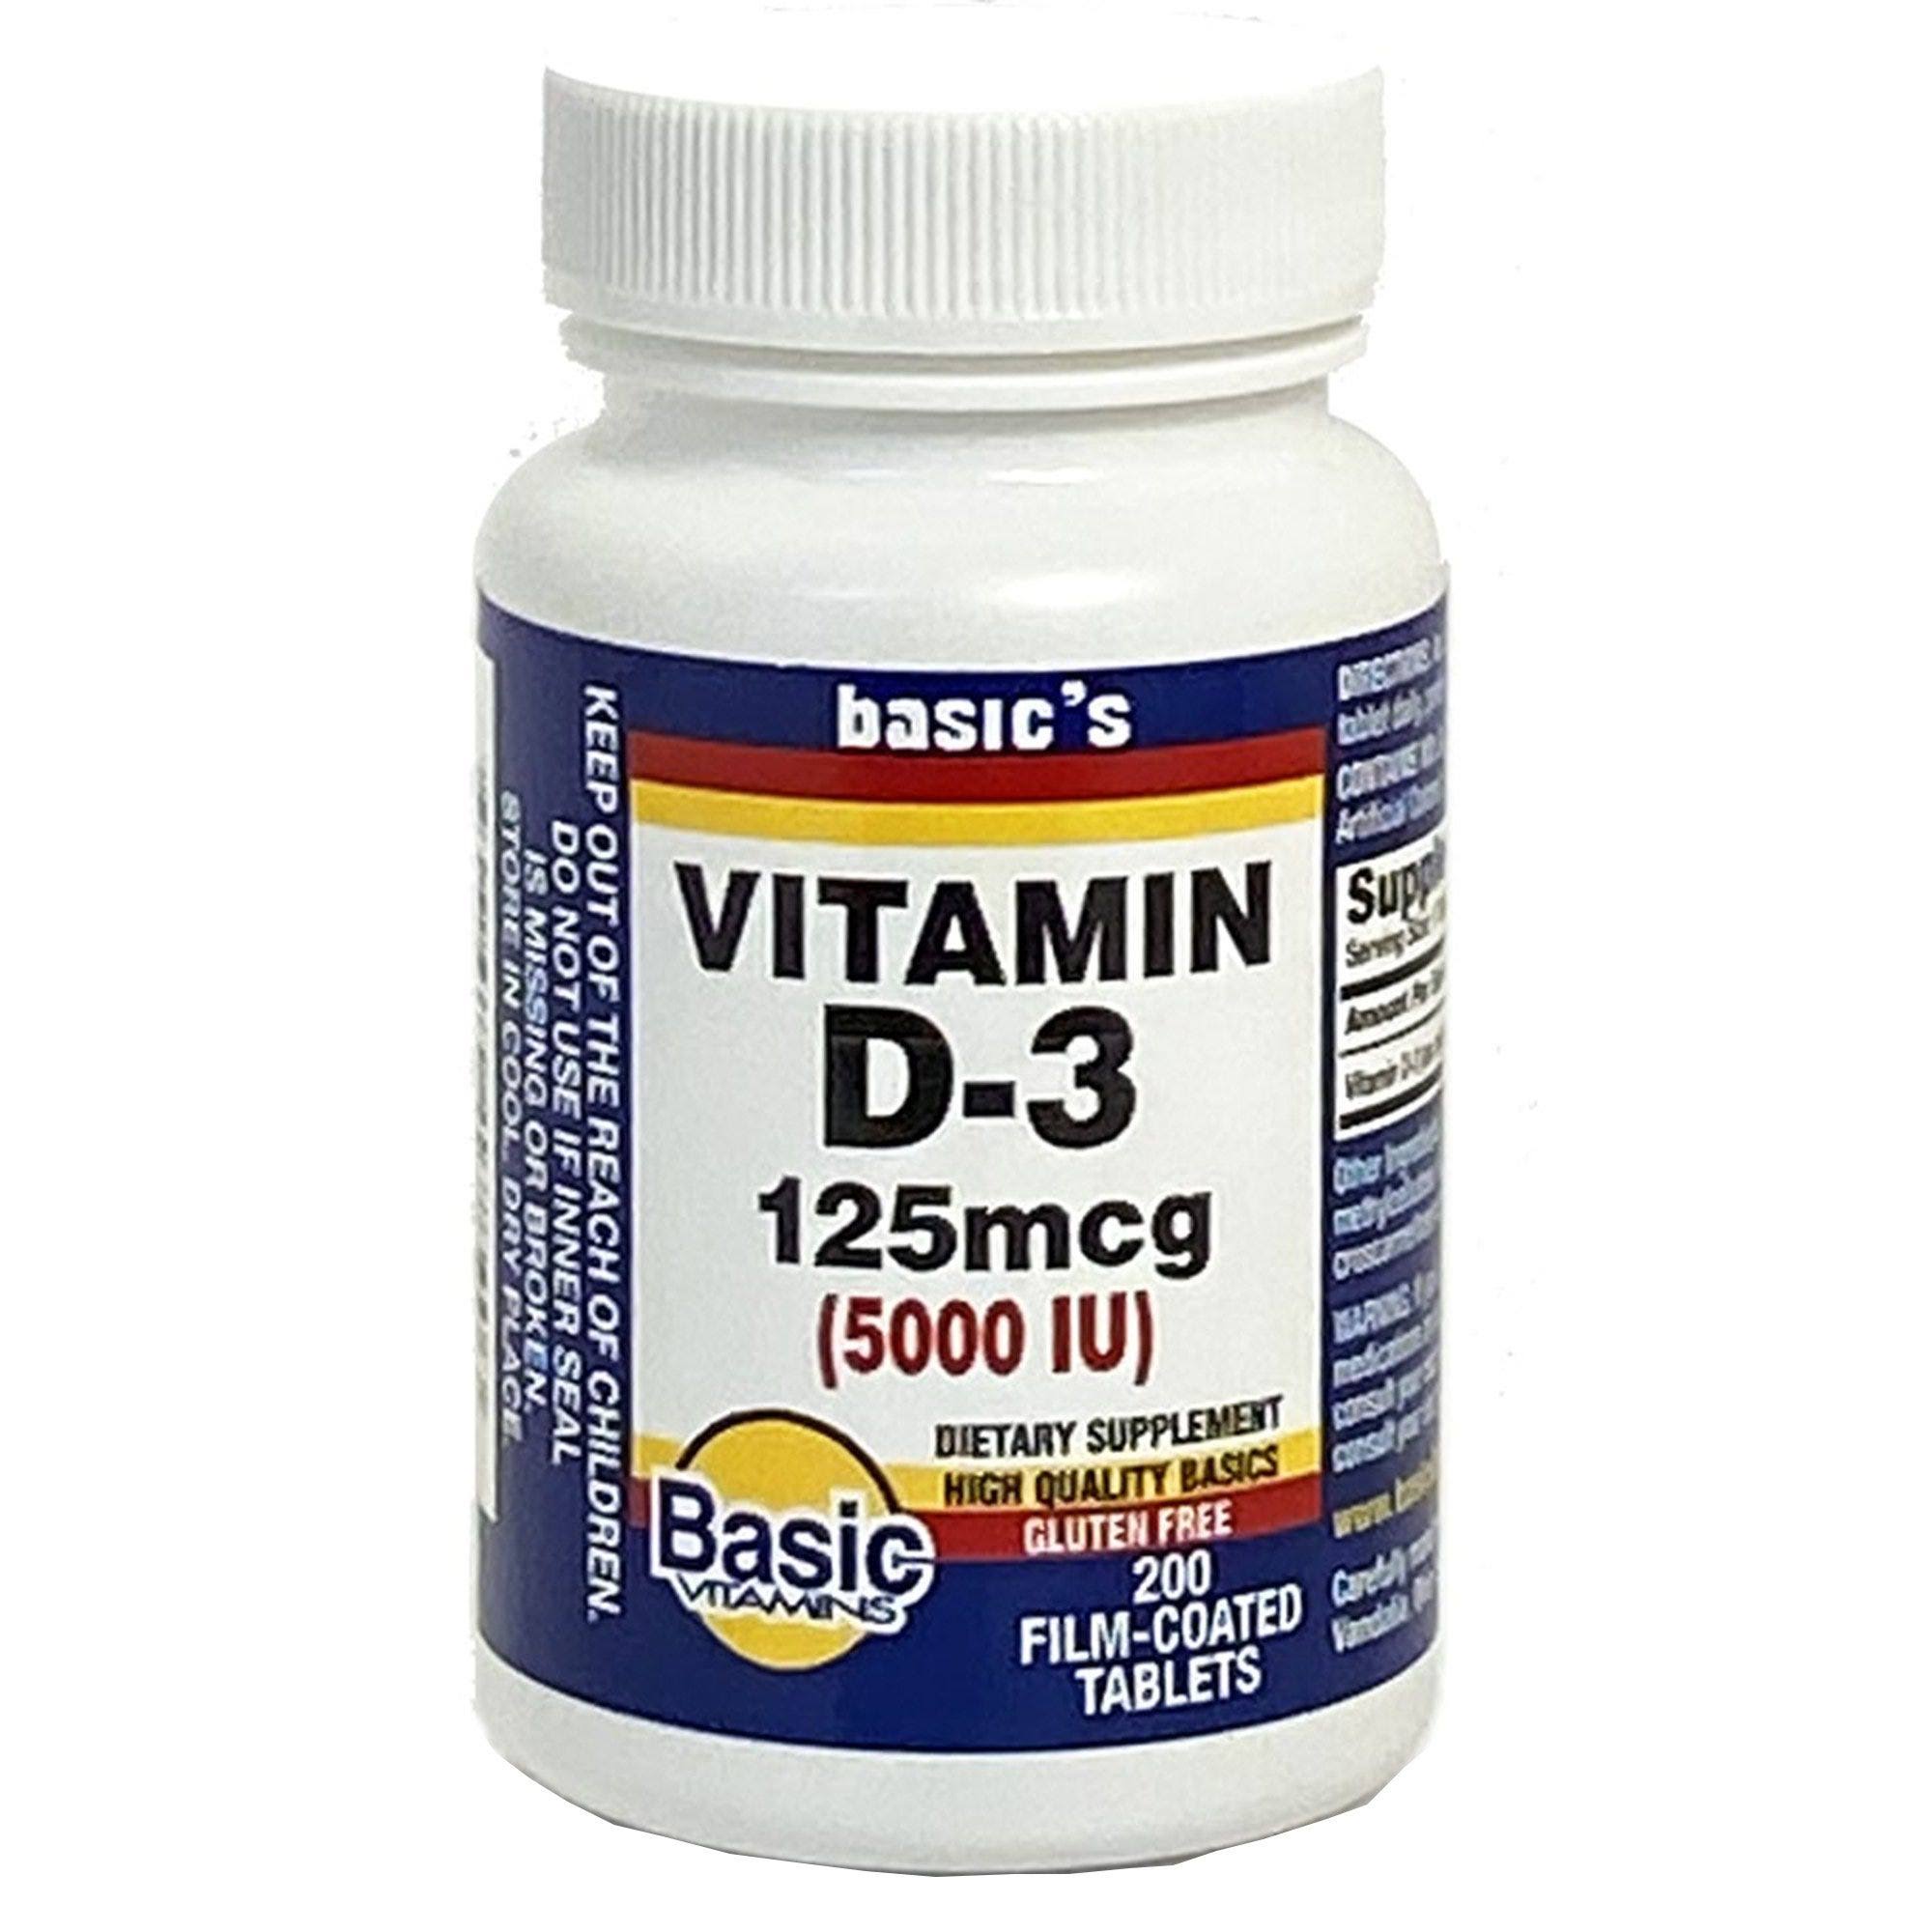 Basic's Vitamin D-3 Tablets